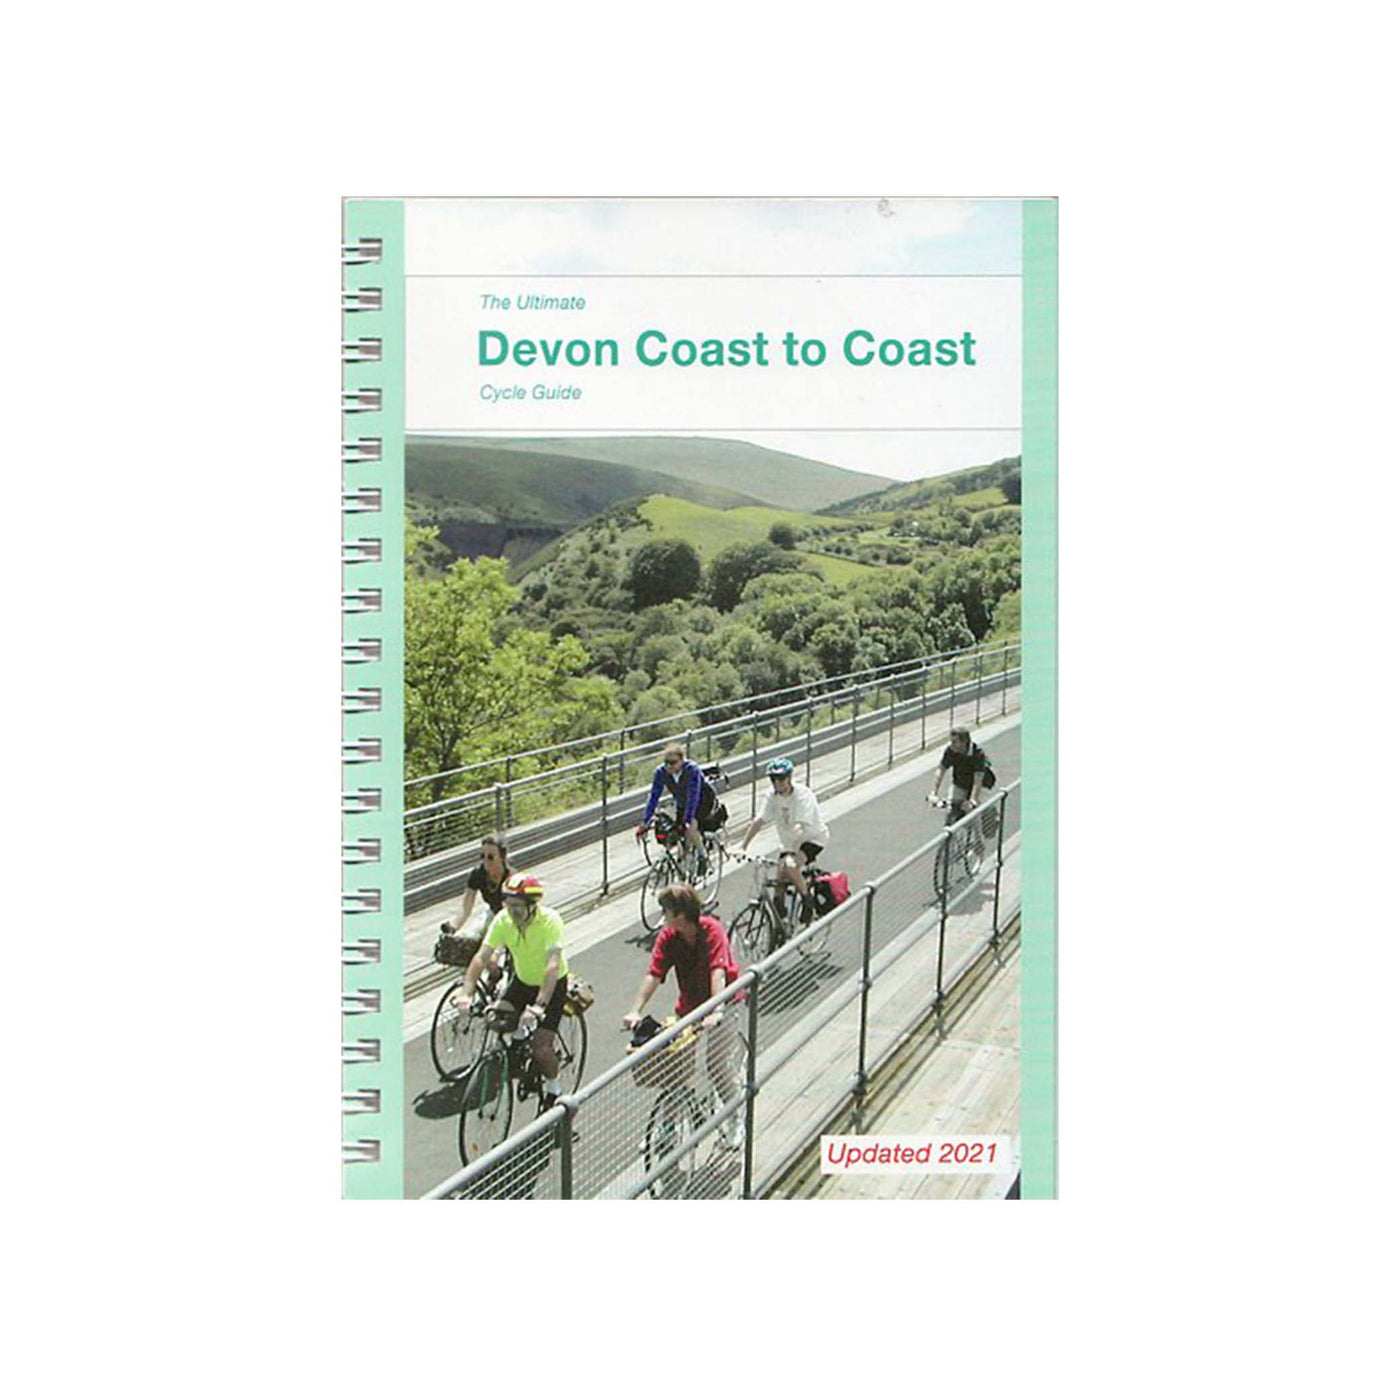 Utimate Devon coast to coast - updated 2021 